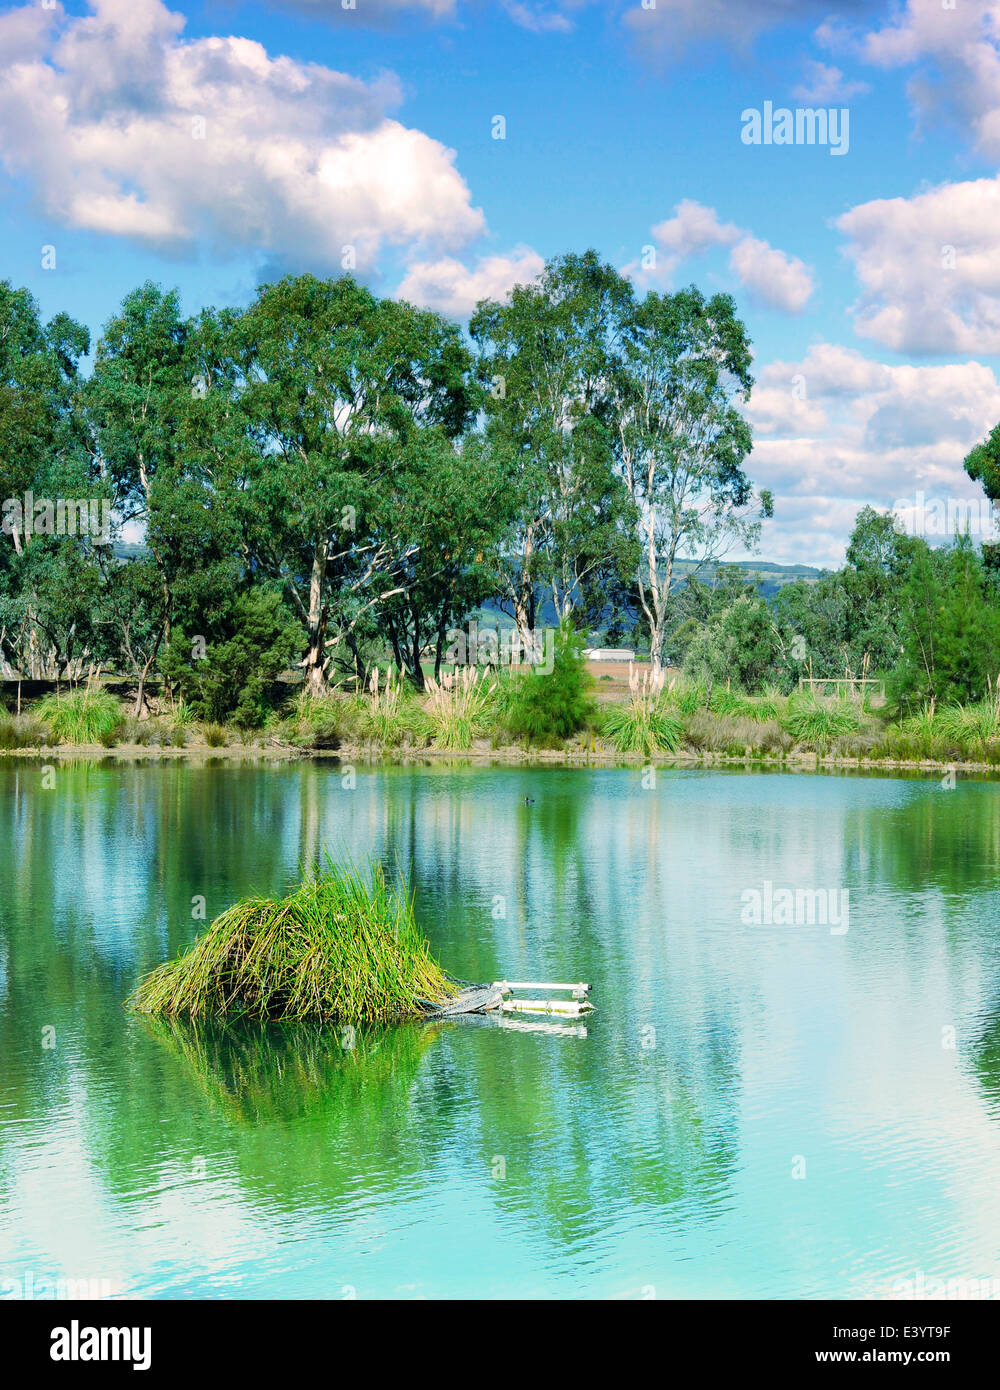 Australian native bushland landscape with large pond in foreground. Stock Photo